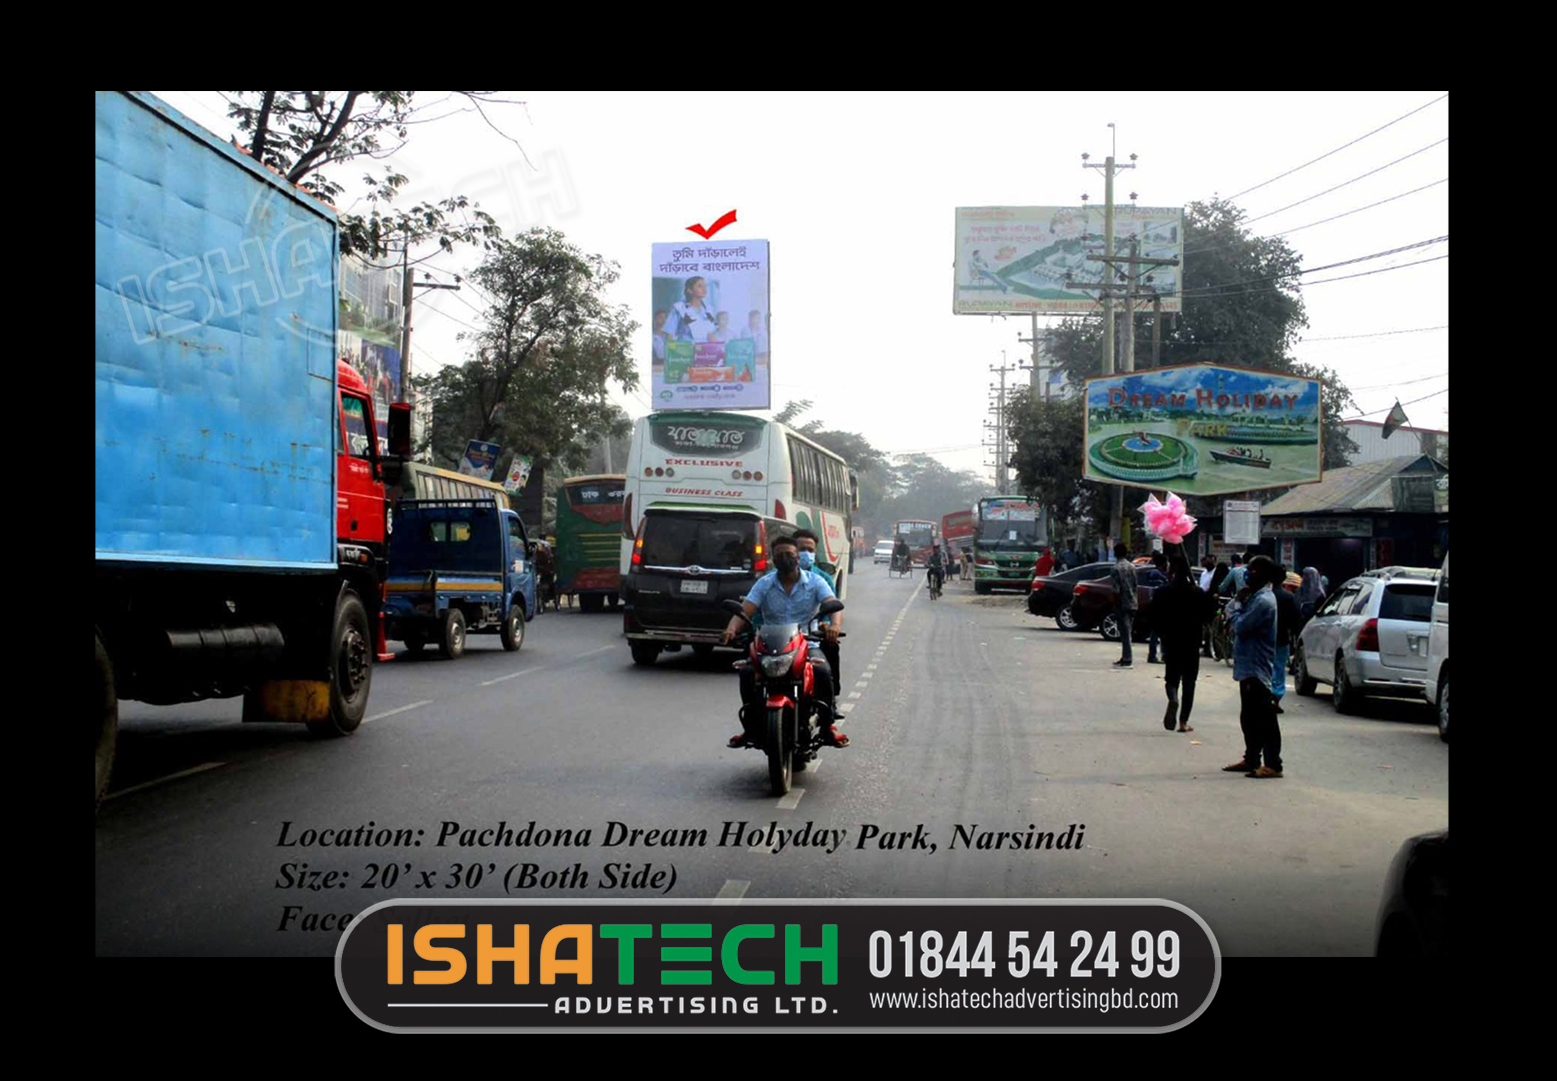 The 10 Best Billboard Advertising Companies in Bangladesh